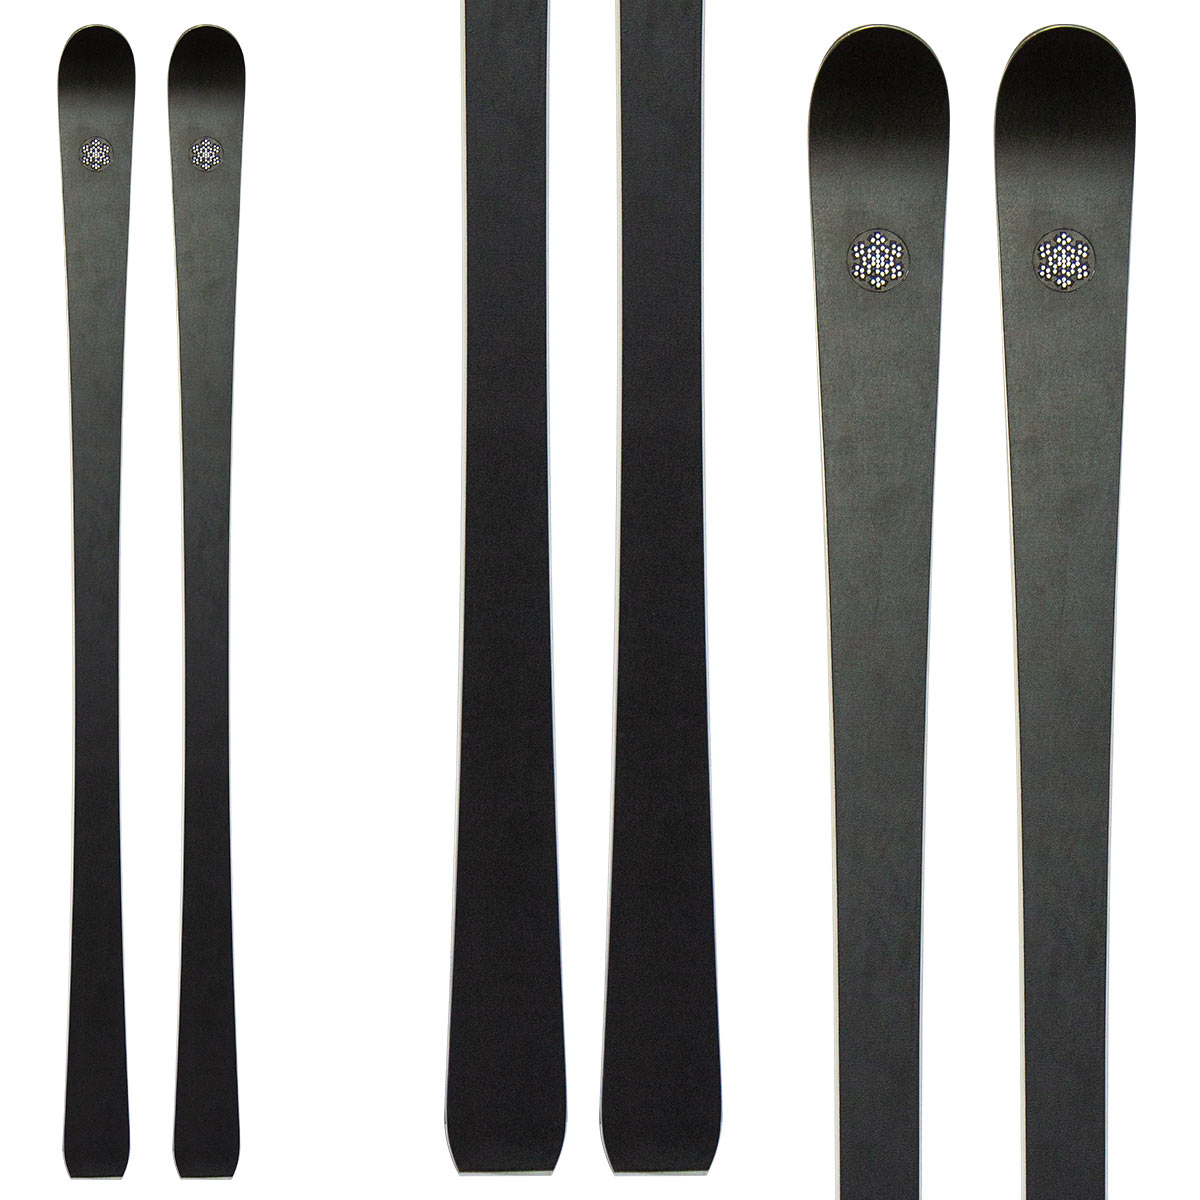  Sci Bottero Ski Swarovski + X-Step plate + VM412 (Colore: nero, Taglia: 174) 